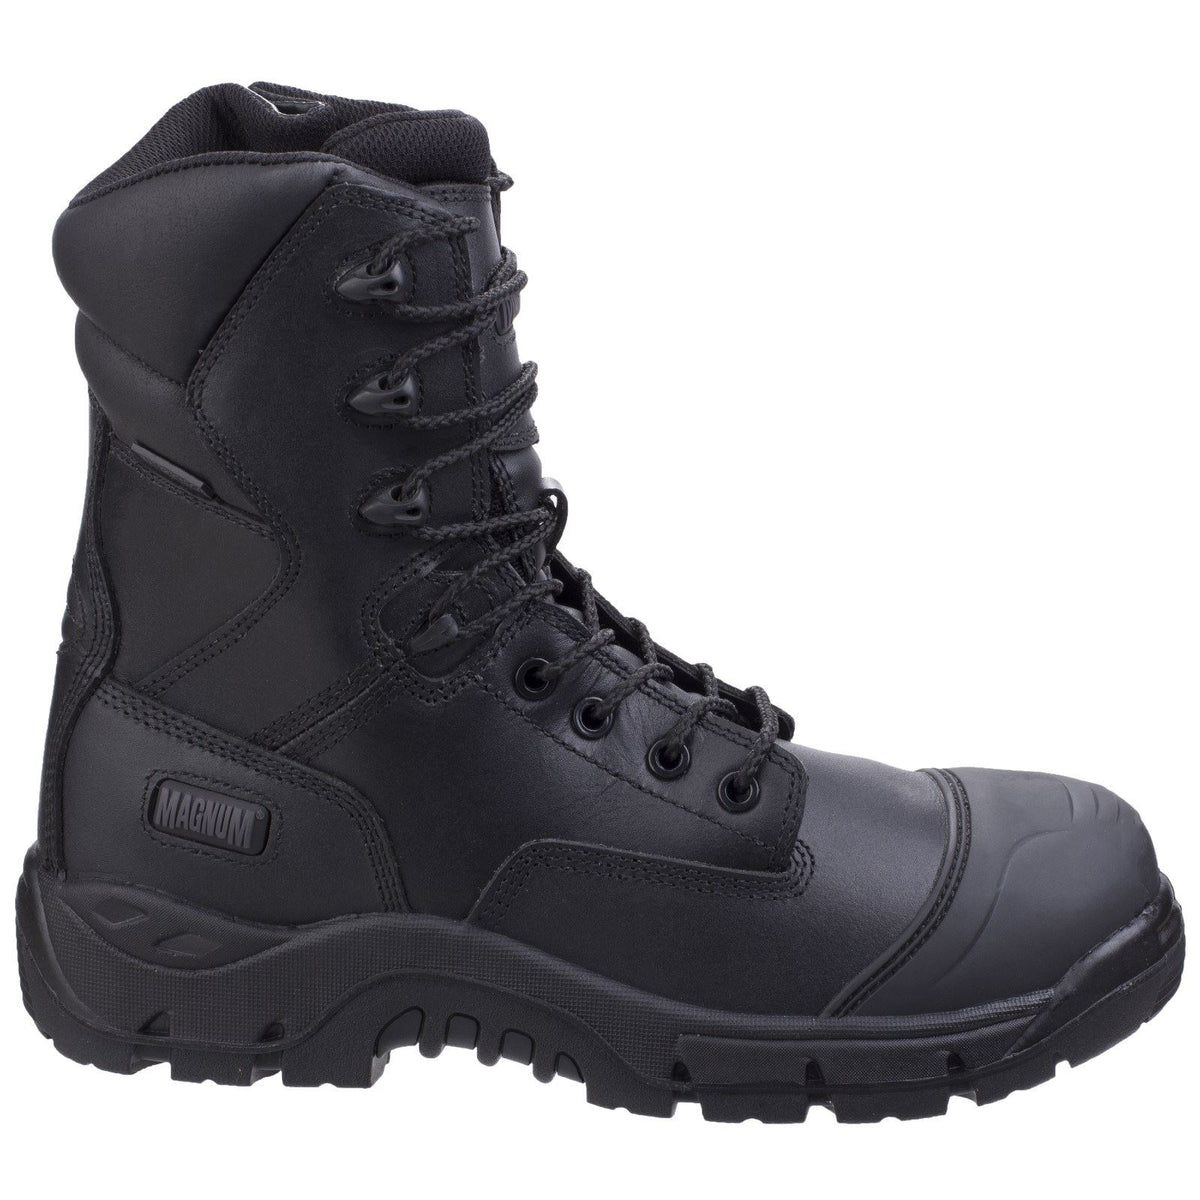 Magnum Rigmaster Side-Zip Uniform Safety Boots